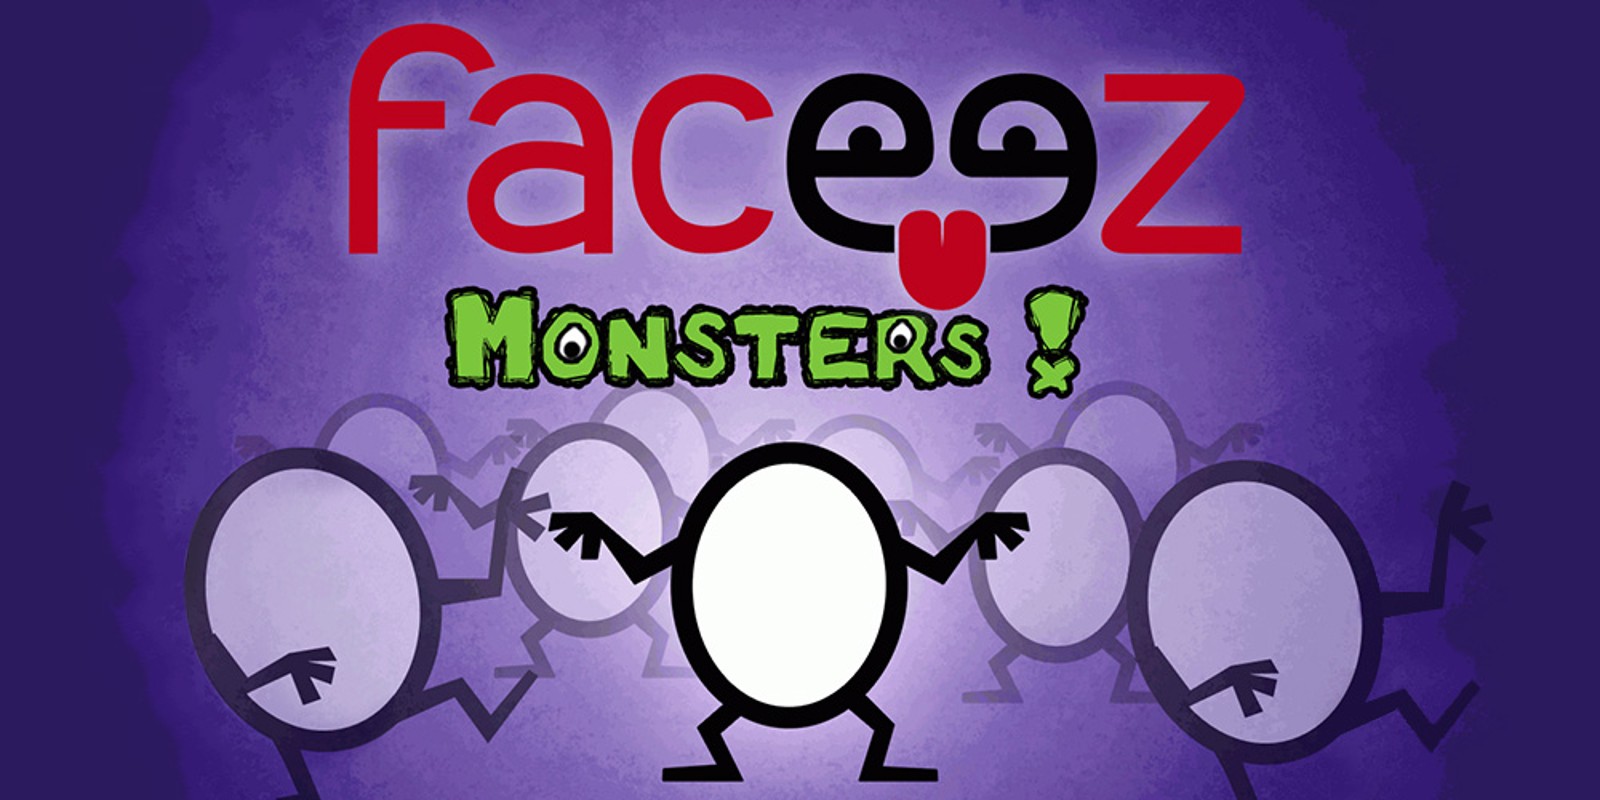 Faceez: Monsters!